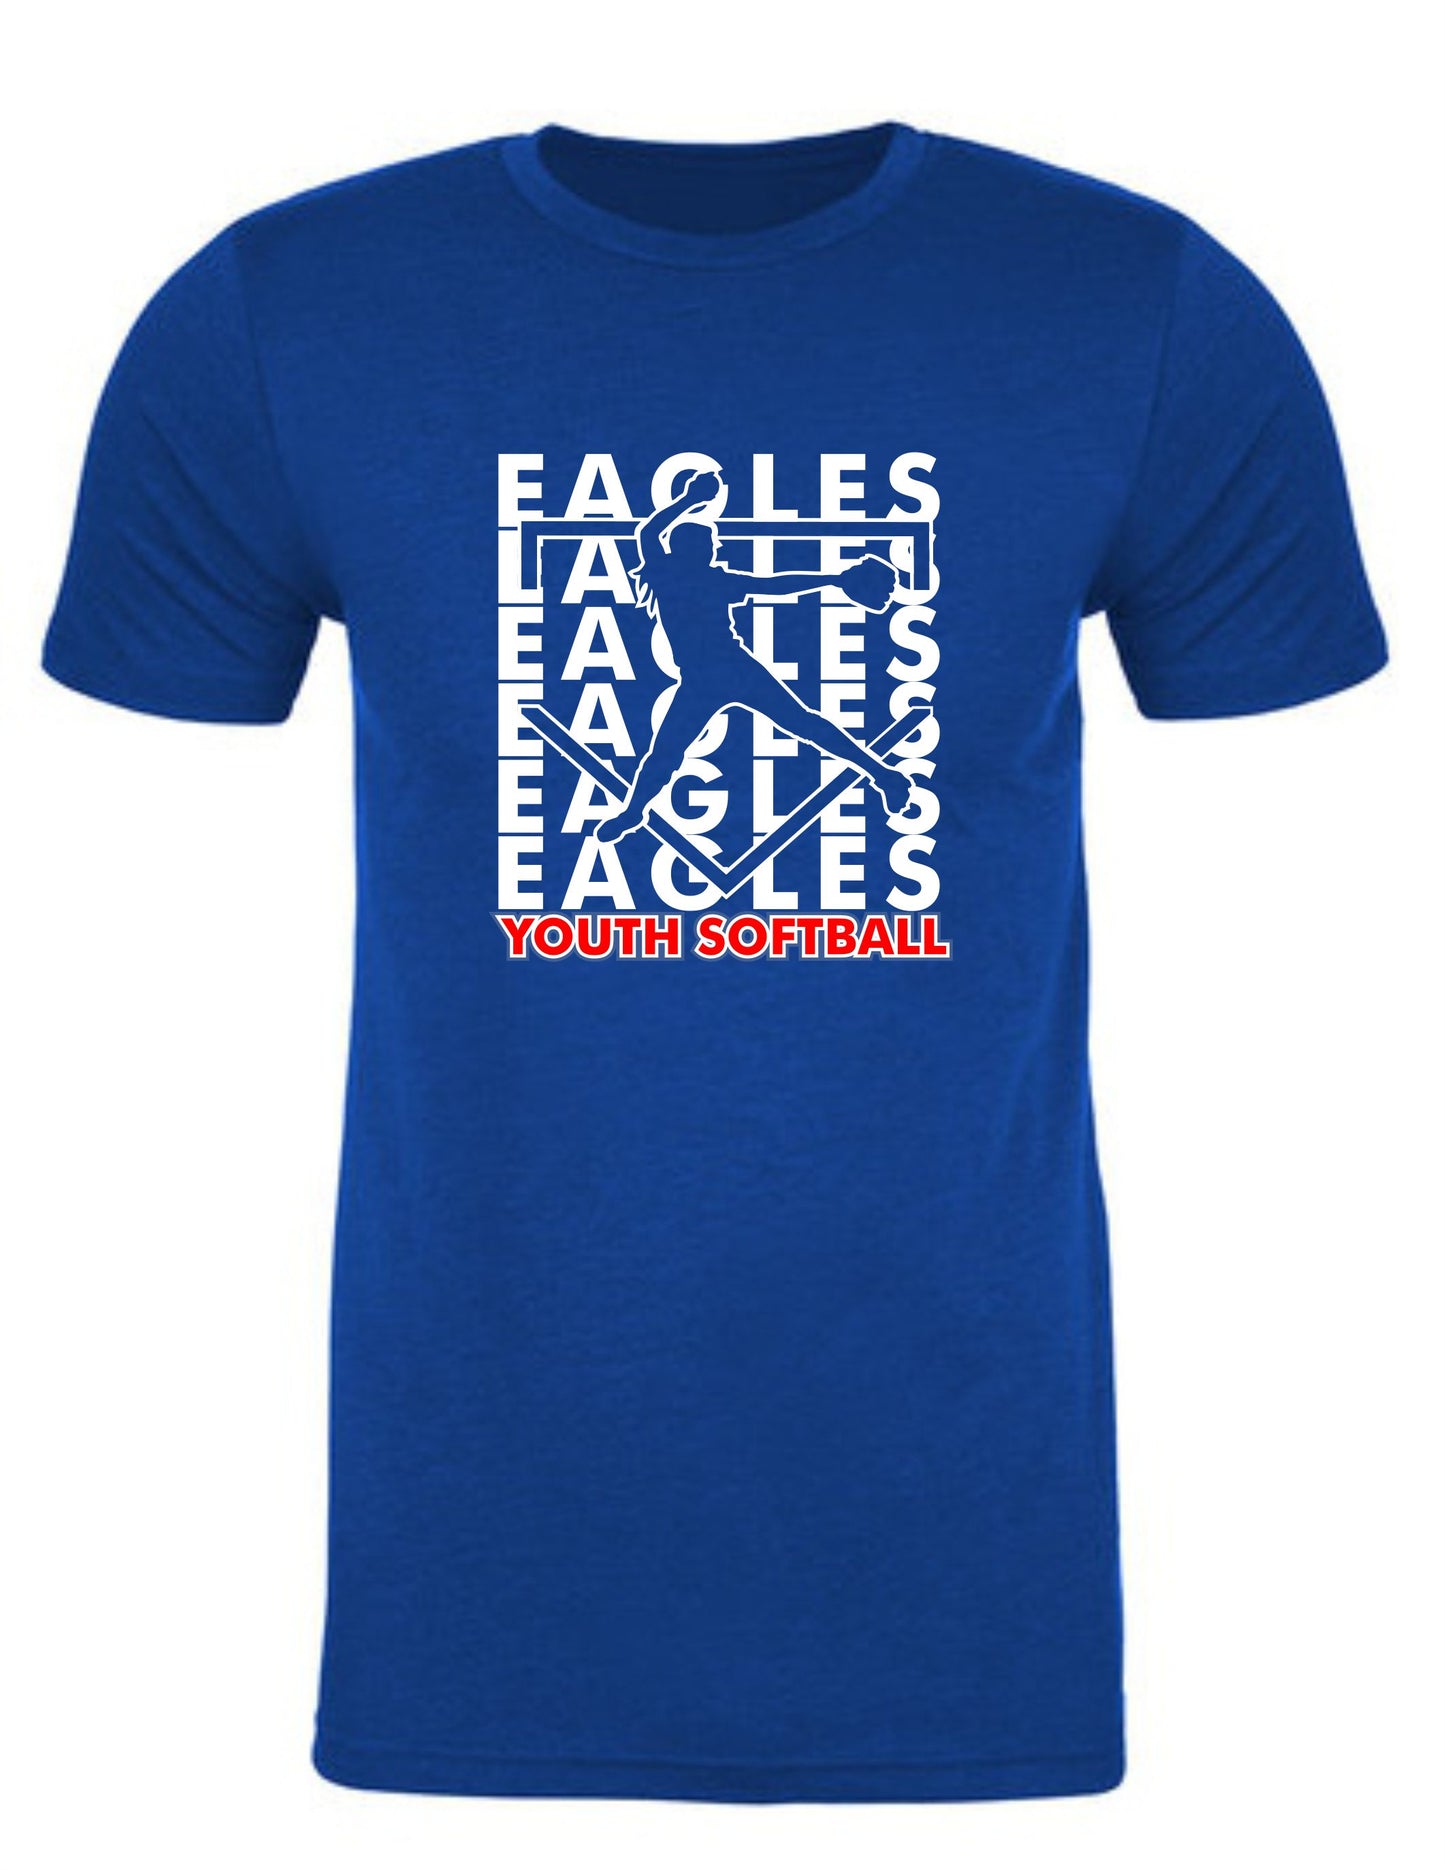 Eagles Youth Softball Pitch Diamond T-Shirt